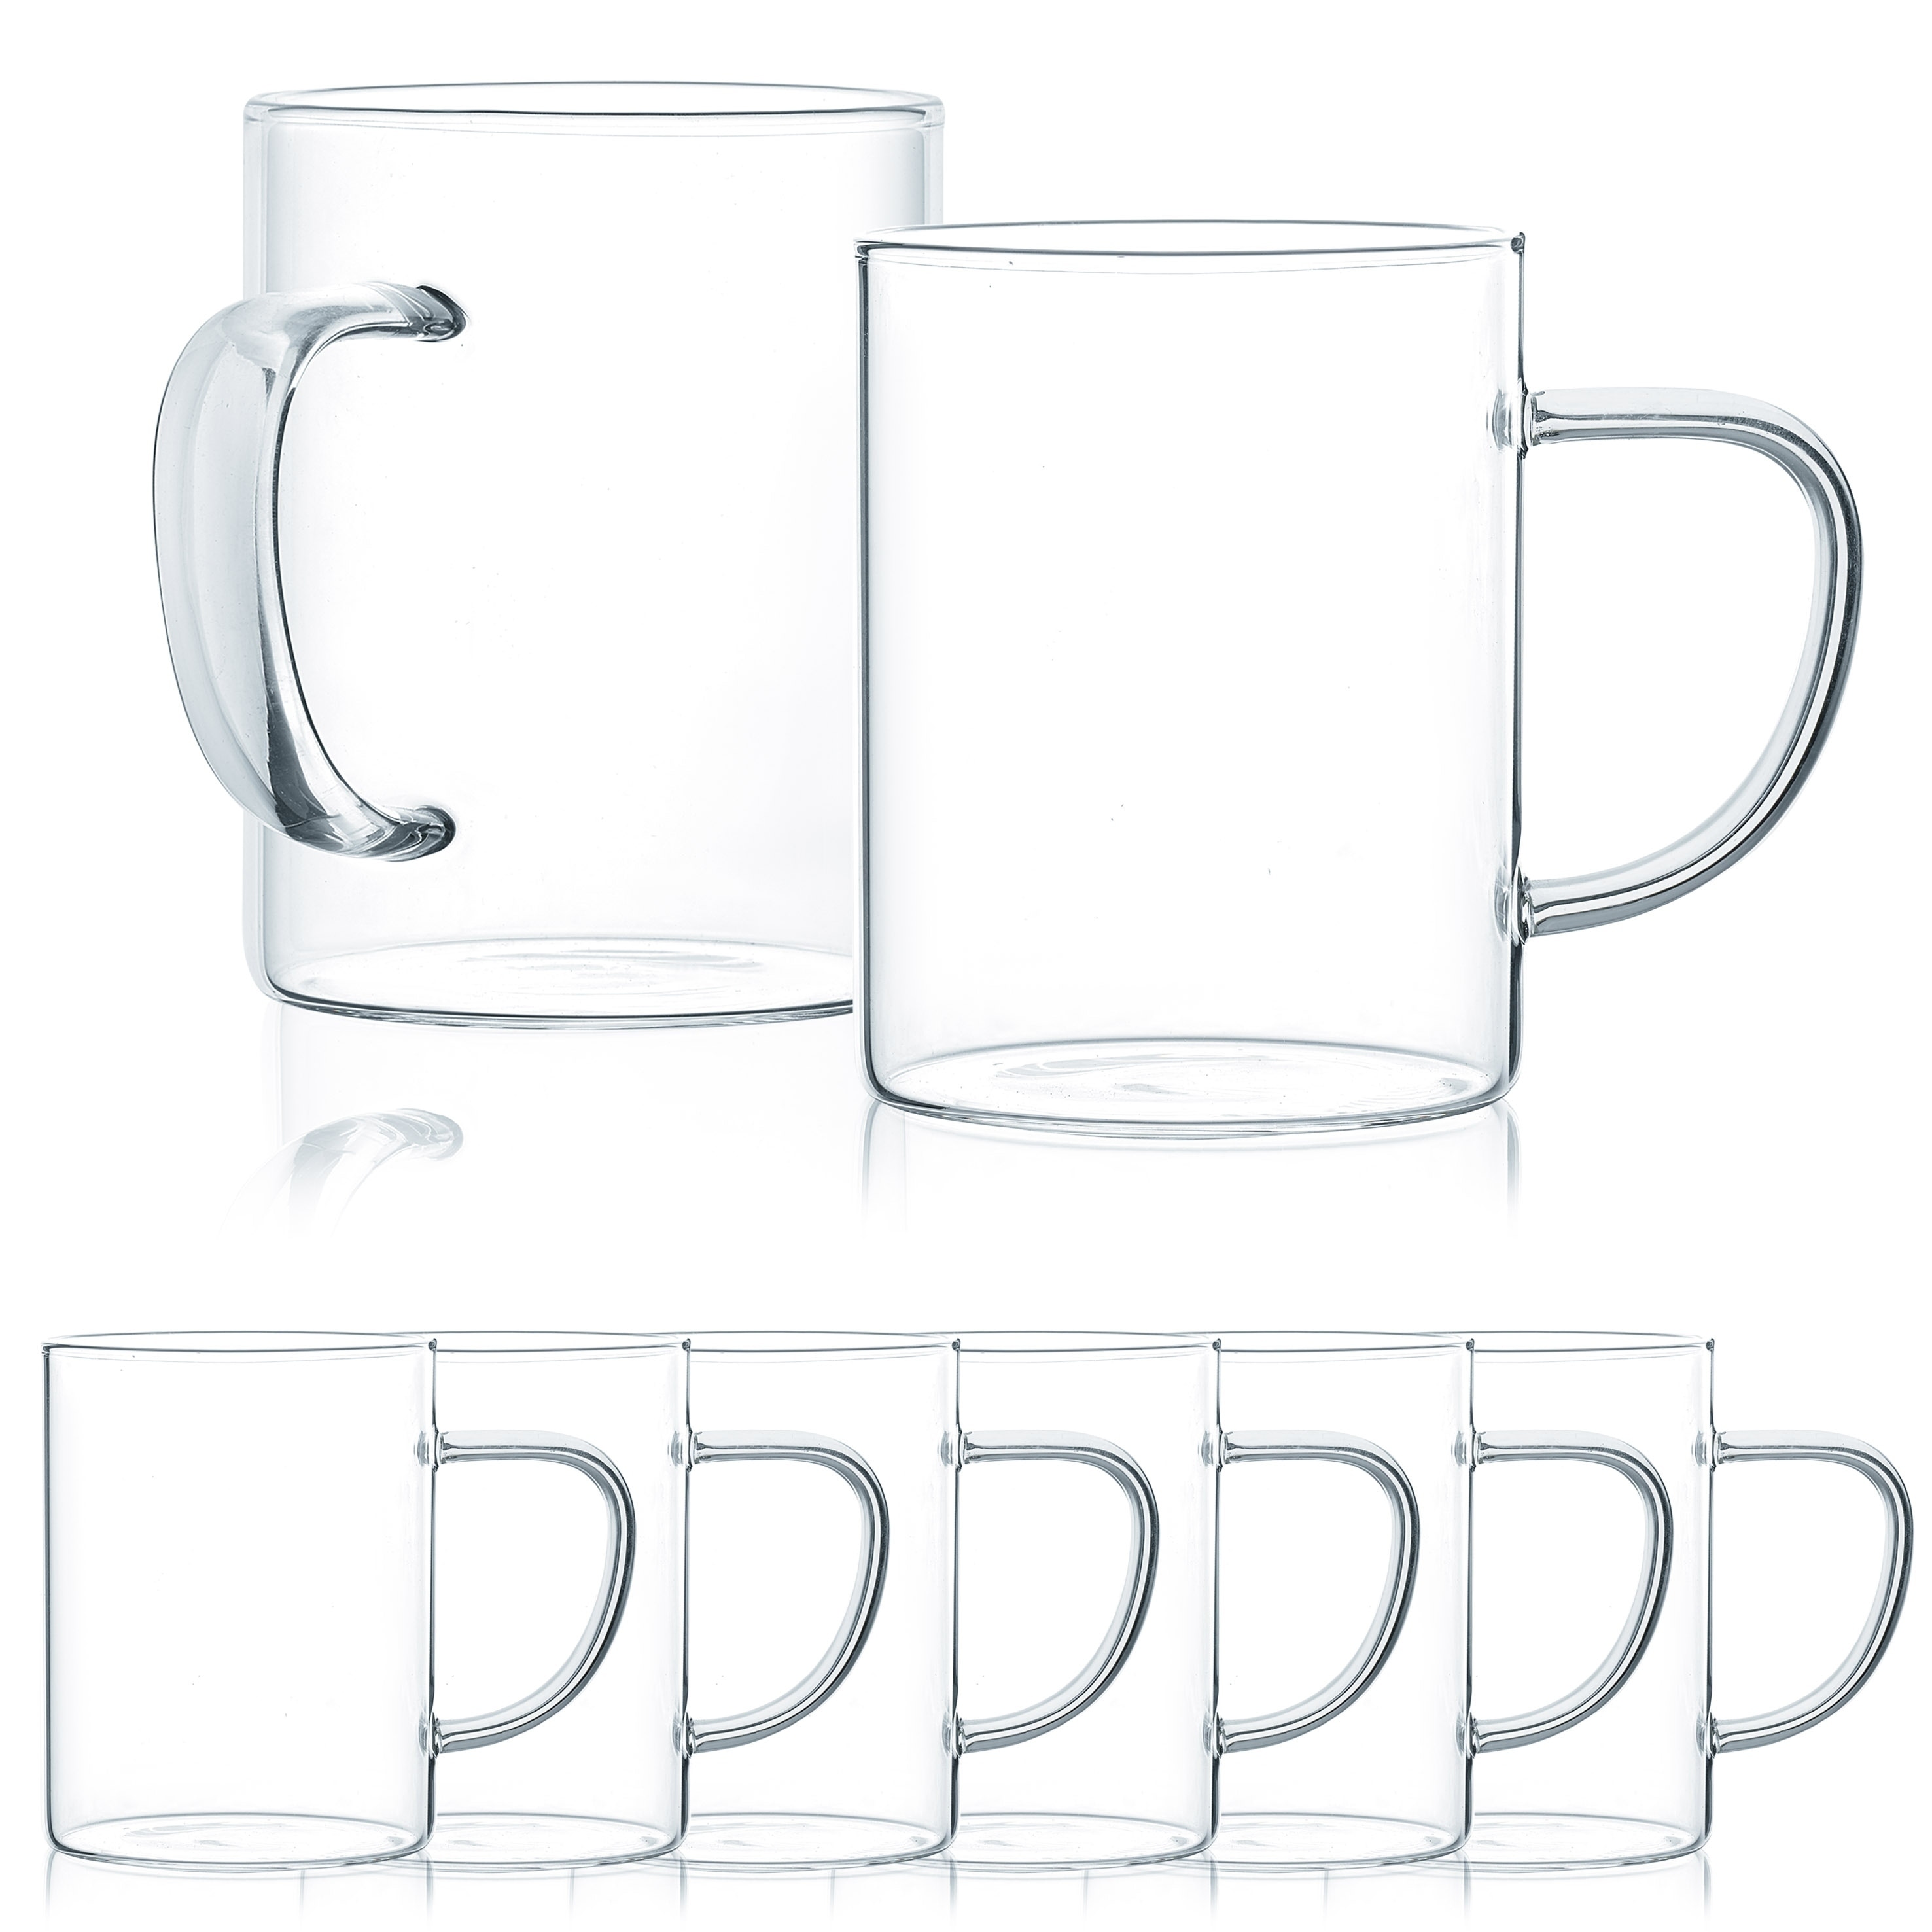 JavaFly Glass Mug, Set of 8, 10.5 oz